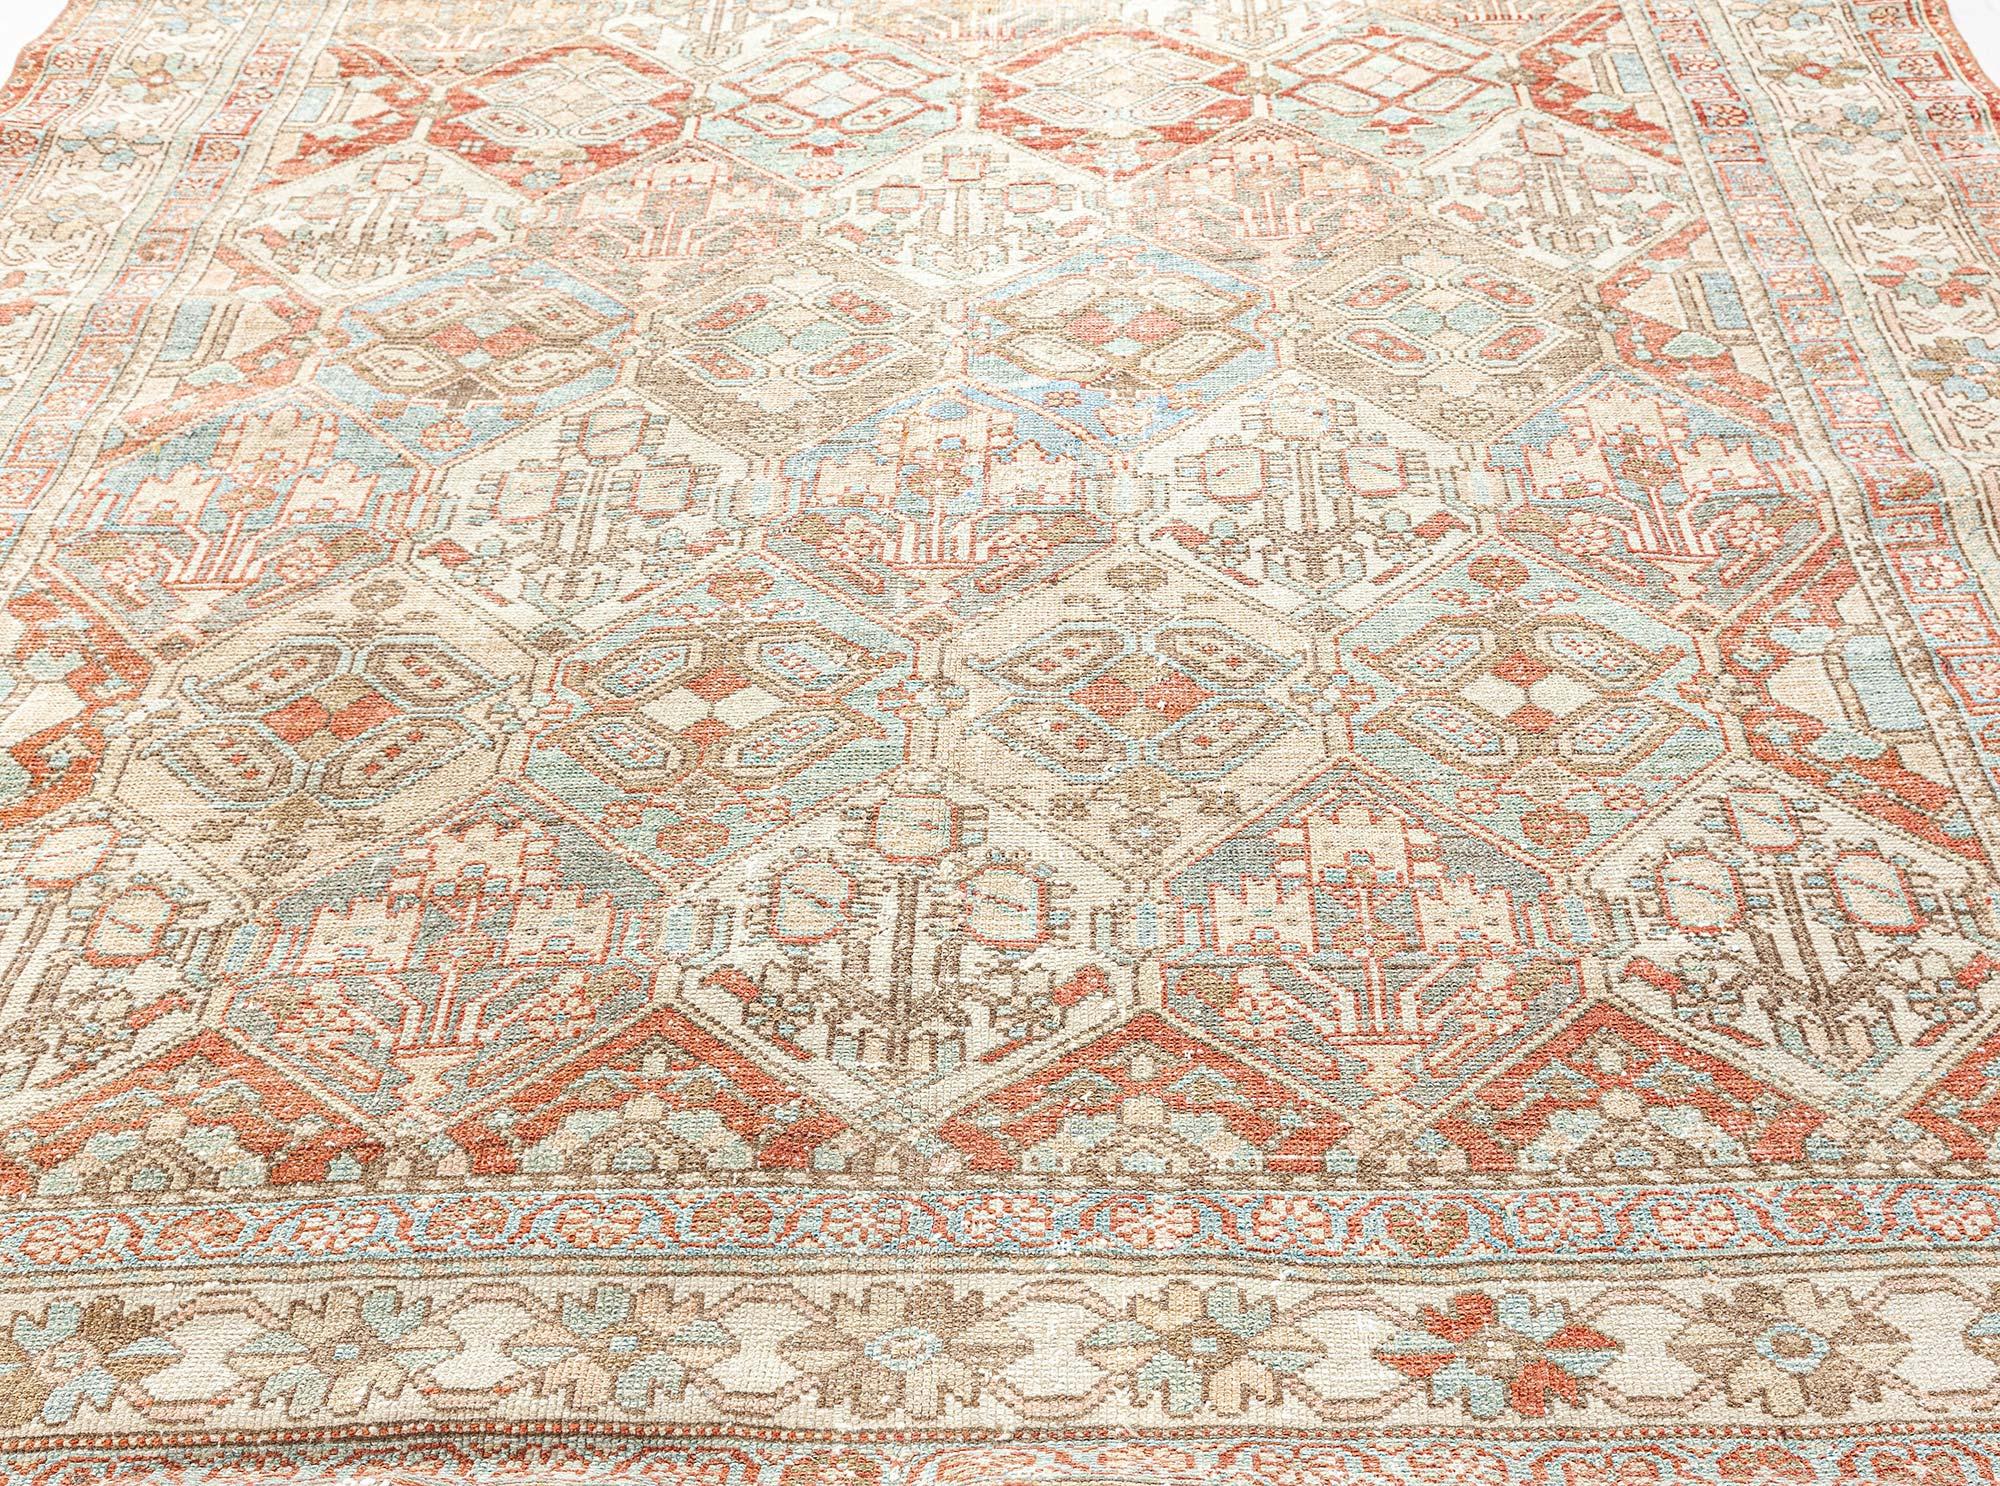 Antique Persian Bakhtiari rug
Size: 6'5